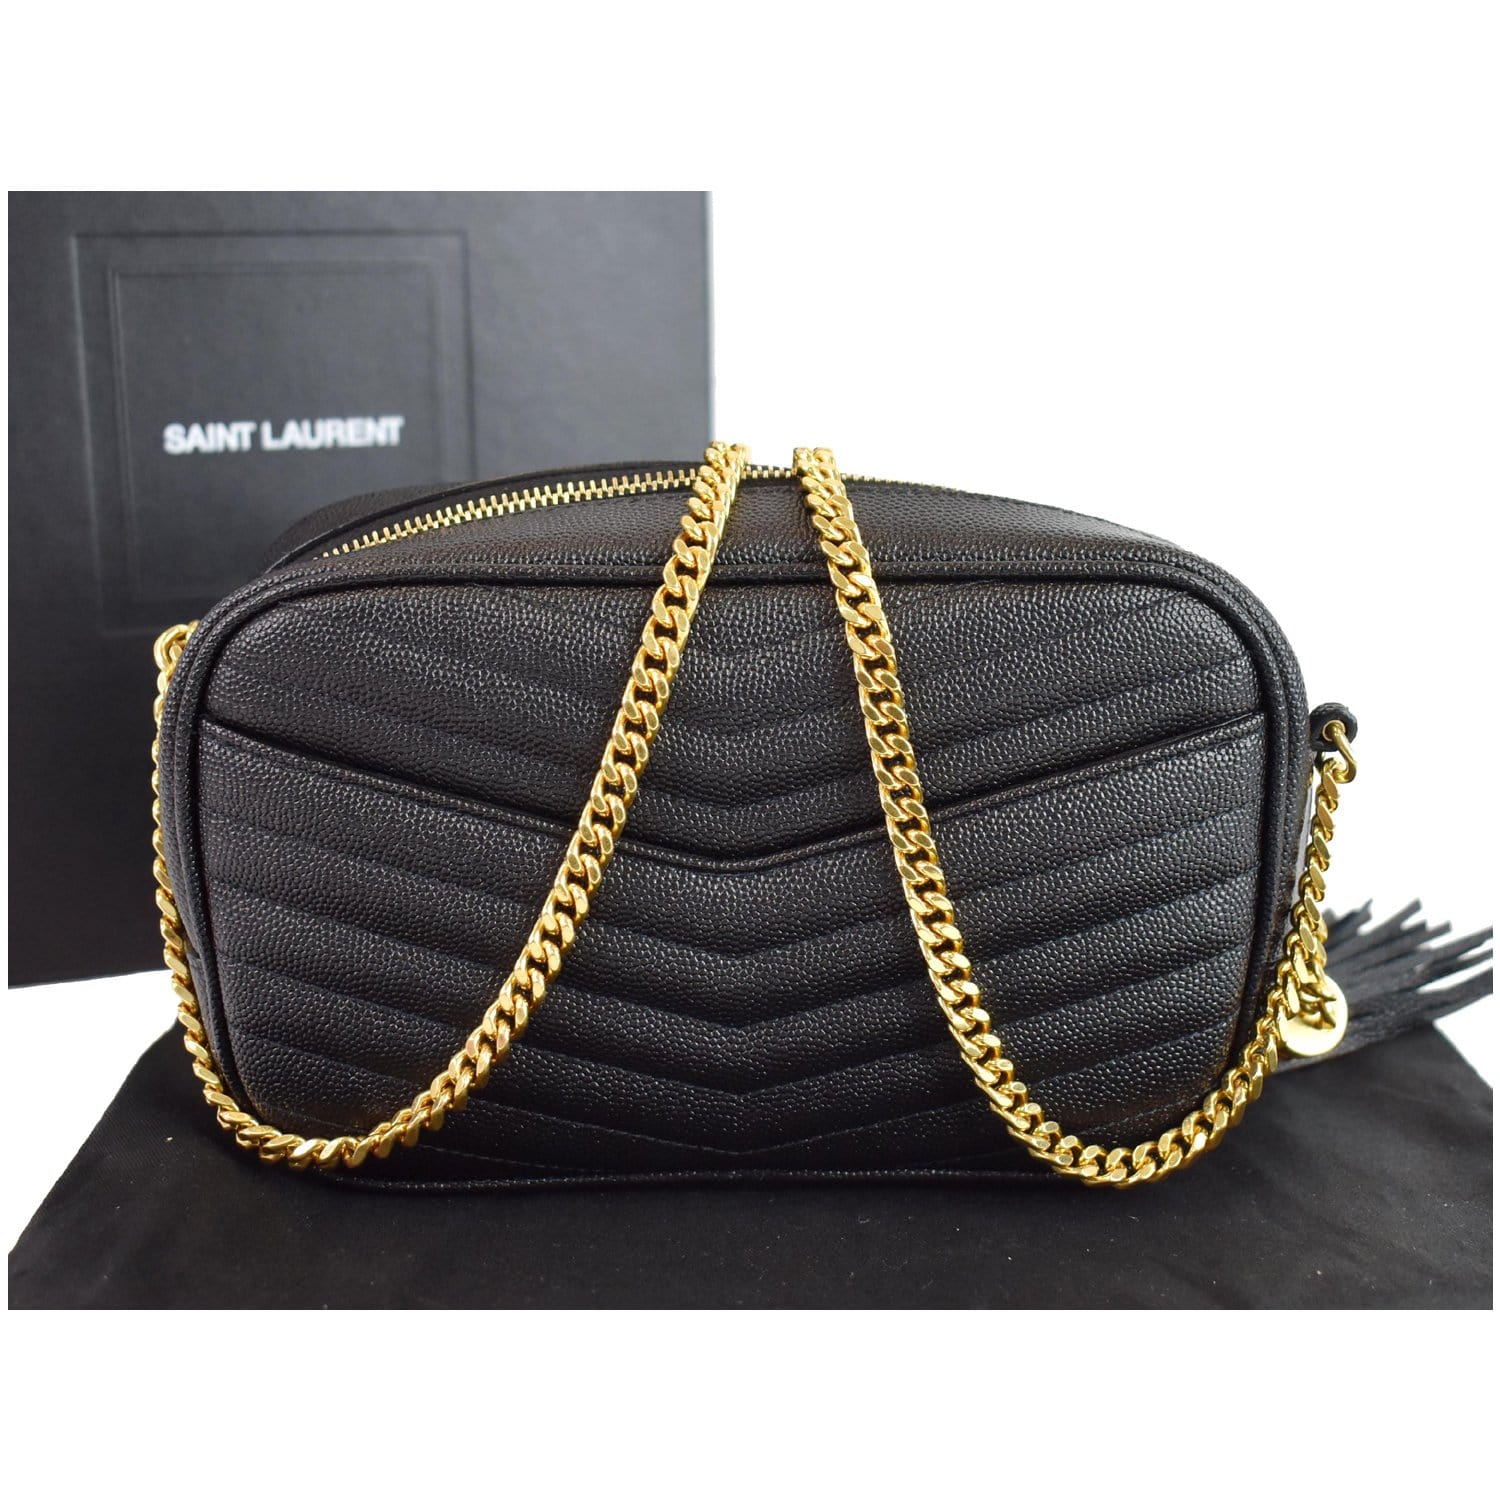 Leather mini bag Yves Saint Laurent Black in Leather - 31364423